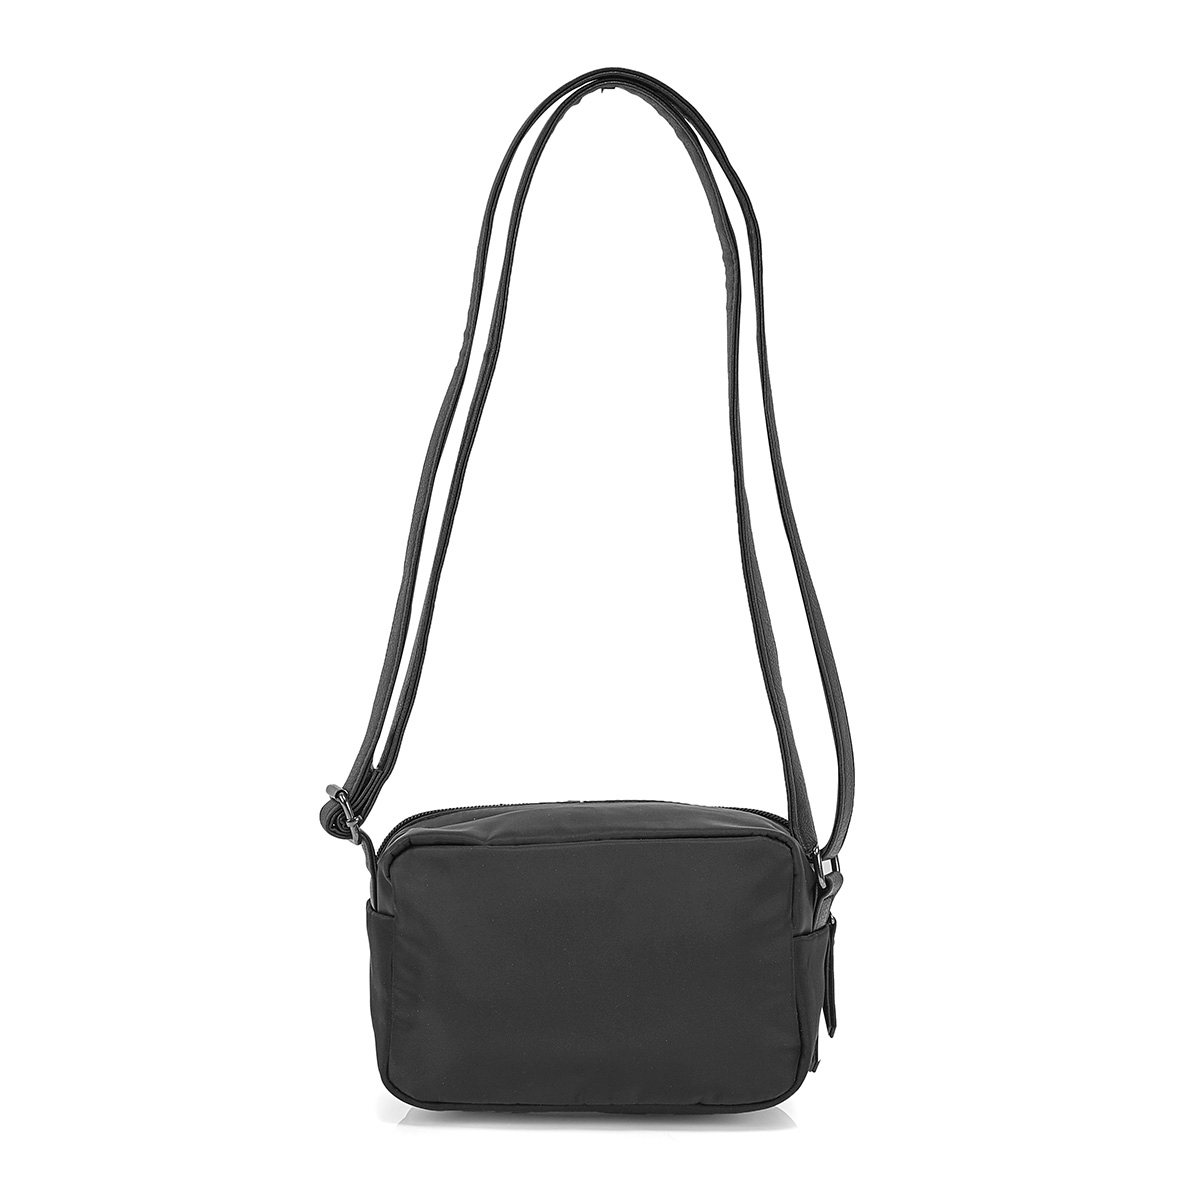 Bench Women's BE0030 Crossbody Bag - Black | SoftMoc.com